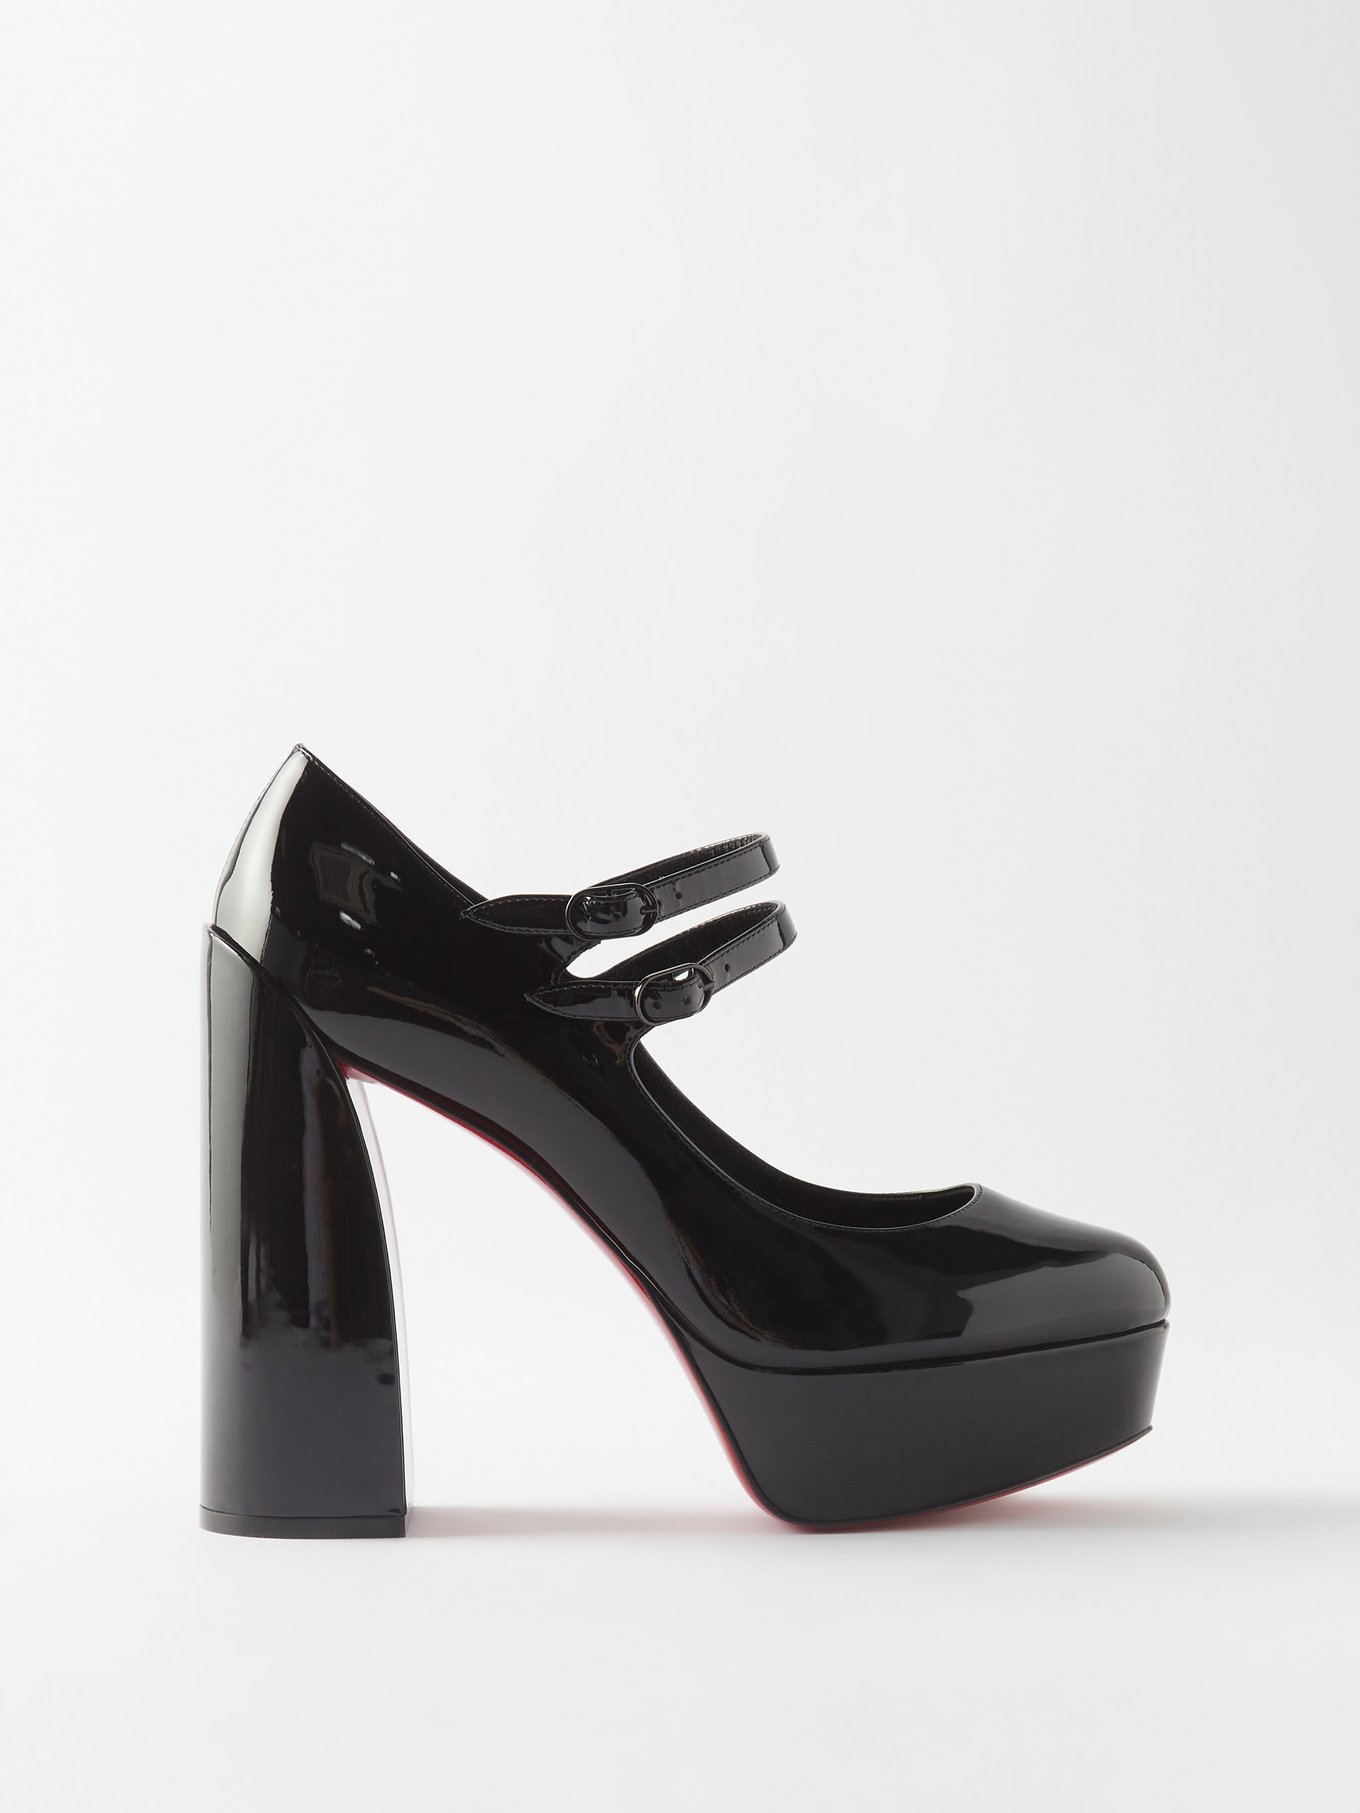 Christian Louboutin Black Patent Leather Lady Peep Toe Platform Pumps Size 35